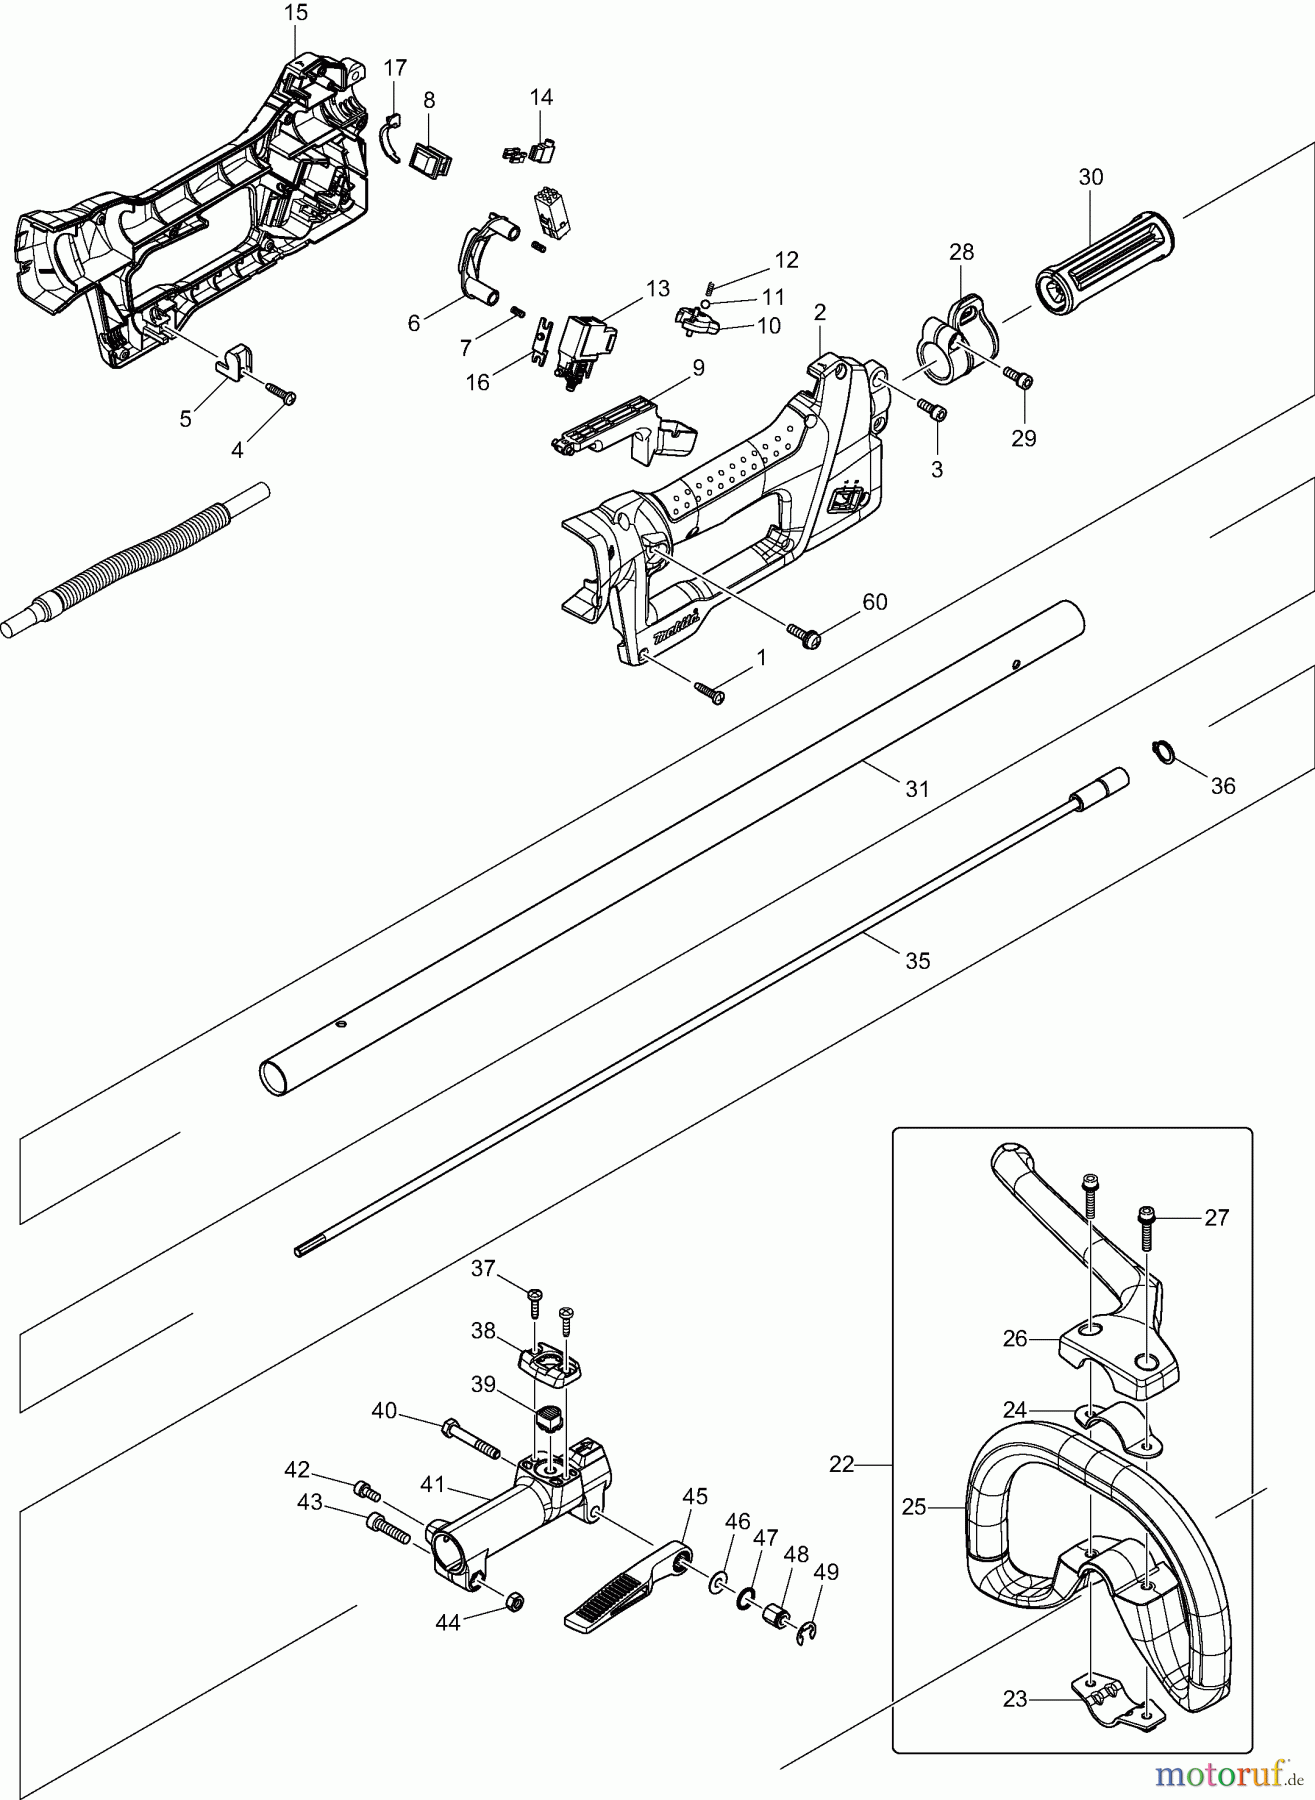  Dolmar Kombisysteme AC3600 1  Gasgriff, Handgriff